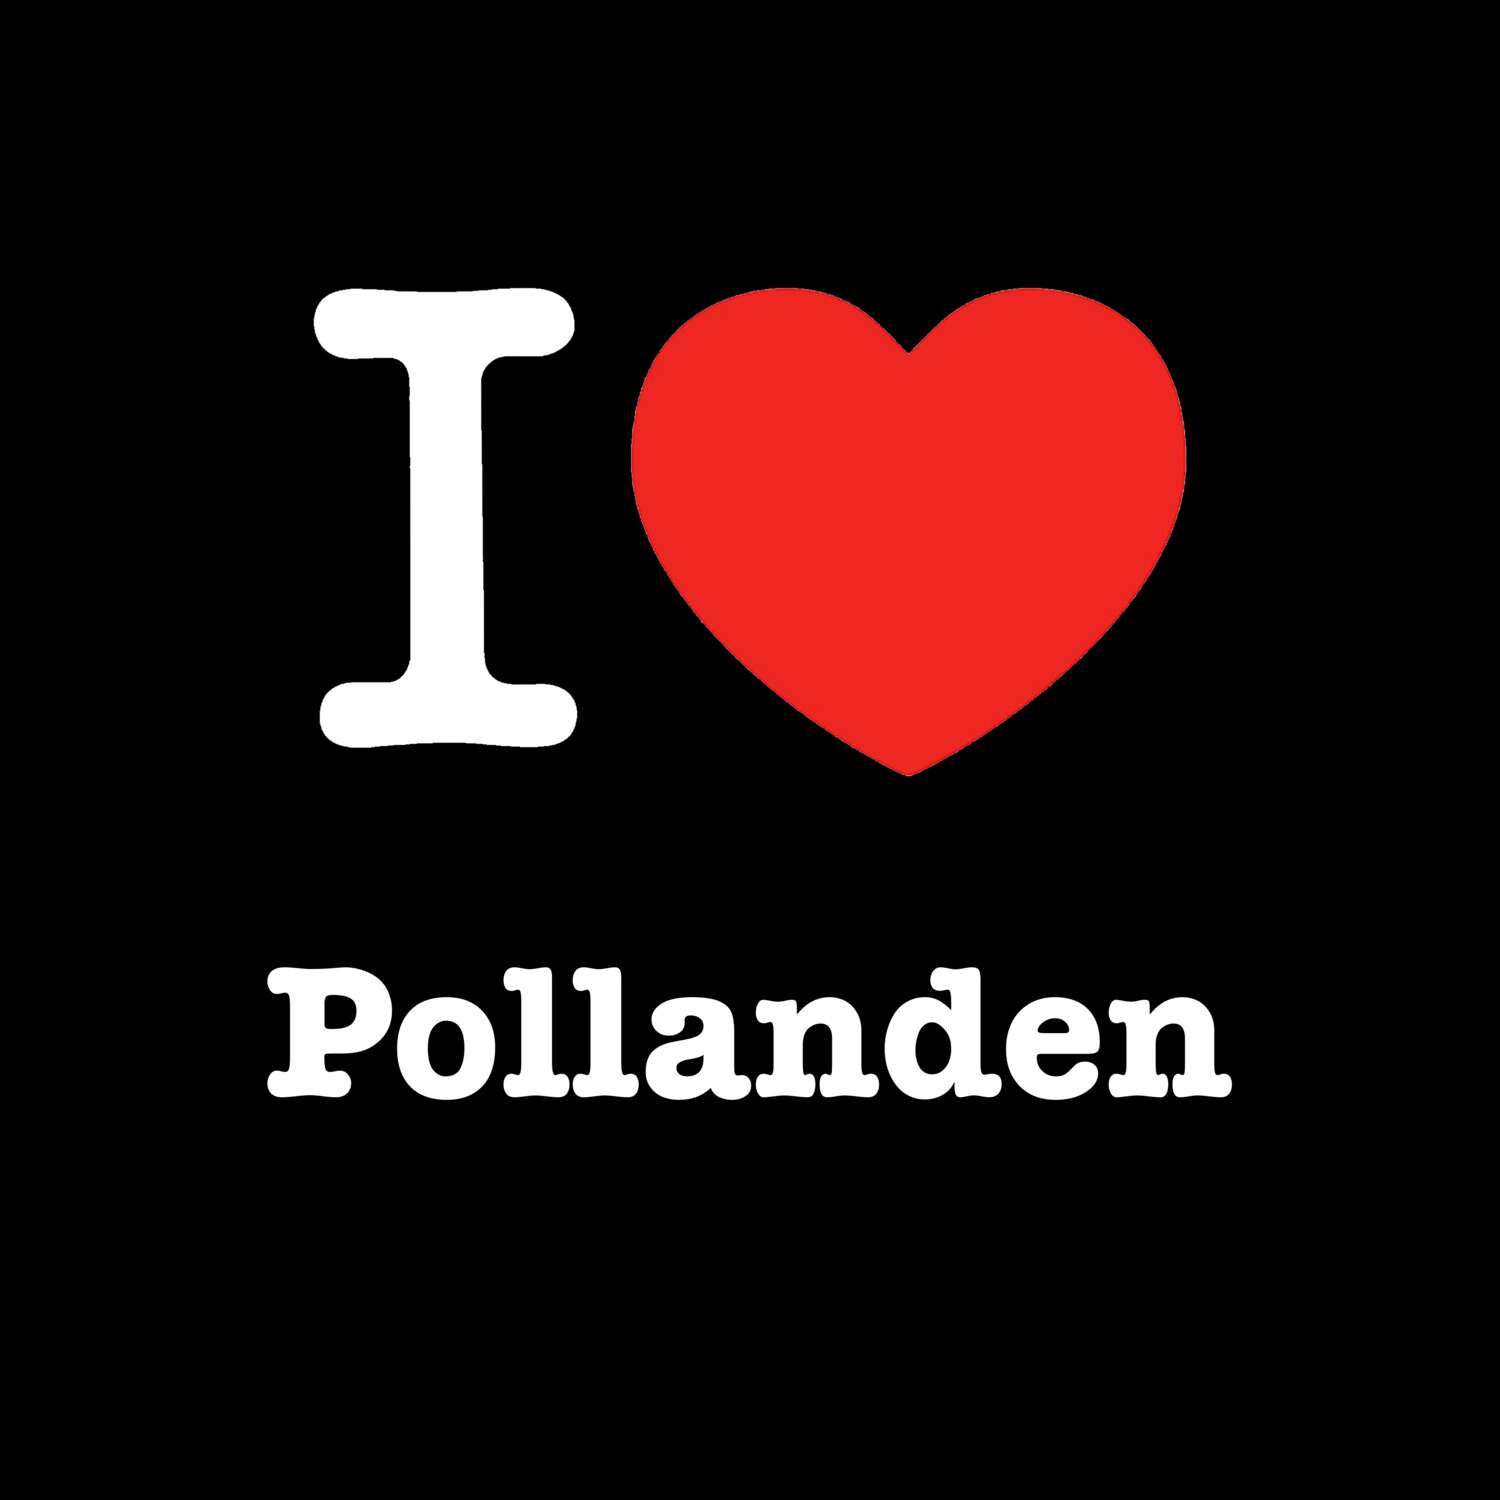 Pollanden T-Shirt »I love«